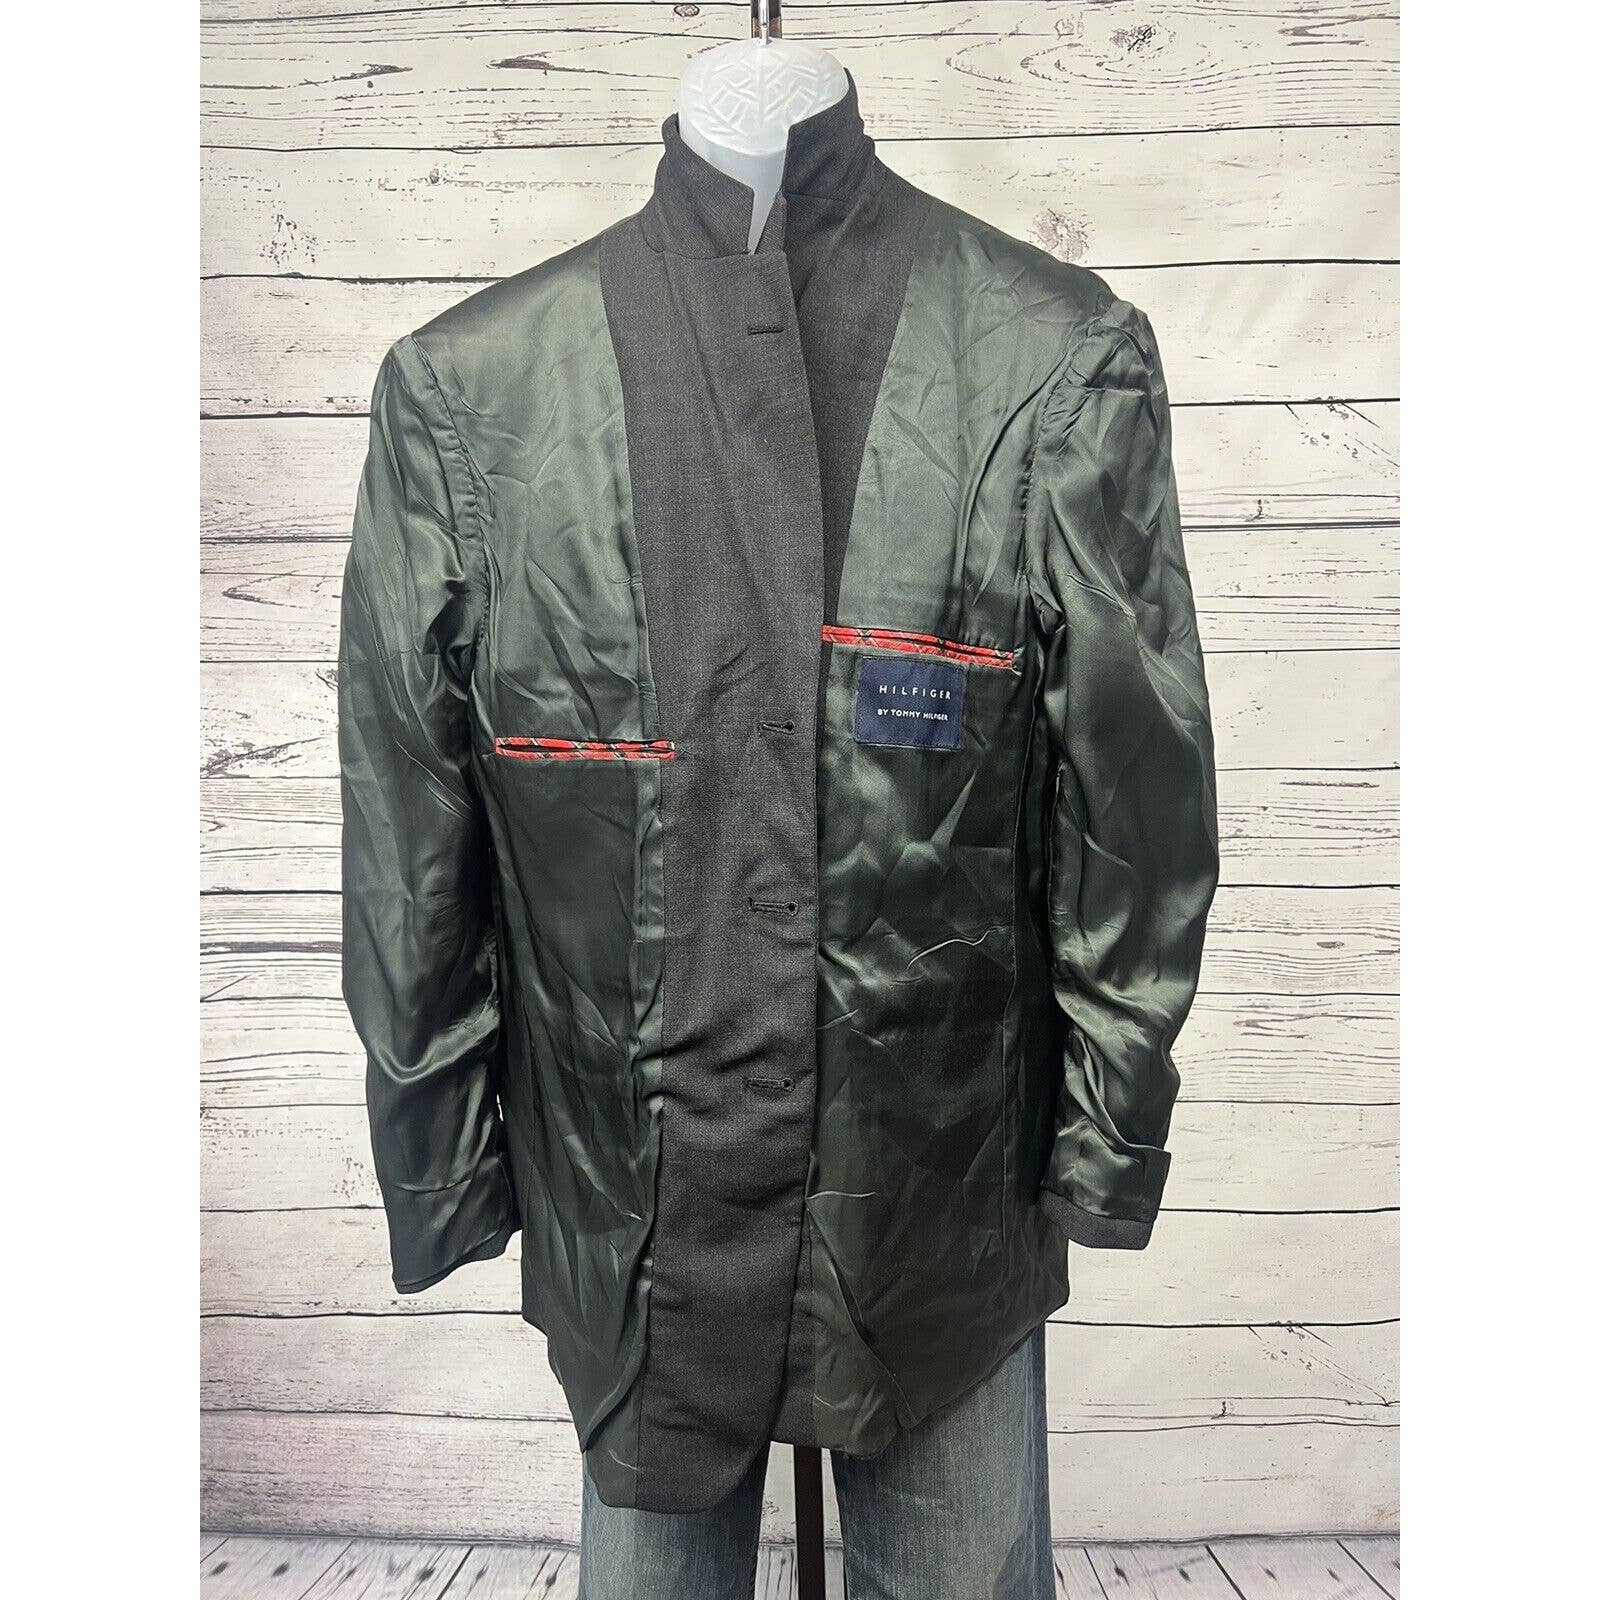 Tommy Hilfiger 3 Button Sport Coat Men’s 42R Black Wool Blend Union Made Modern